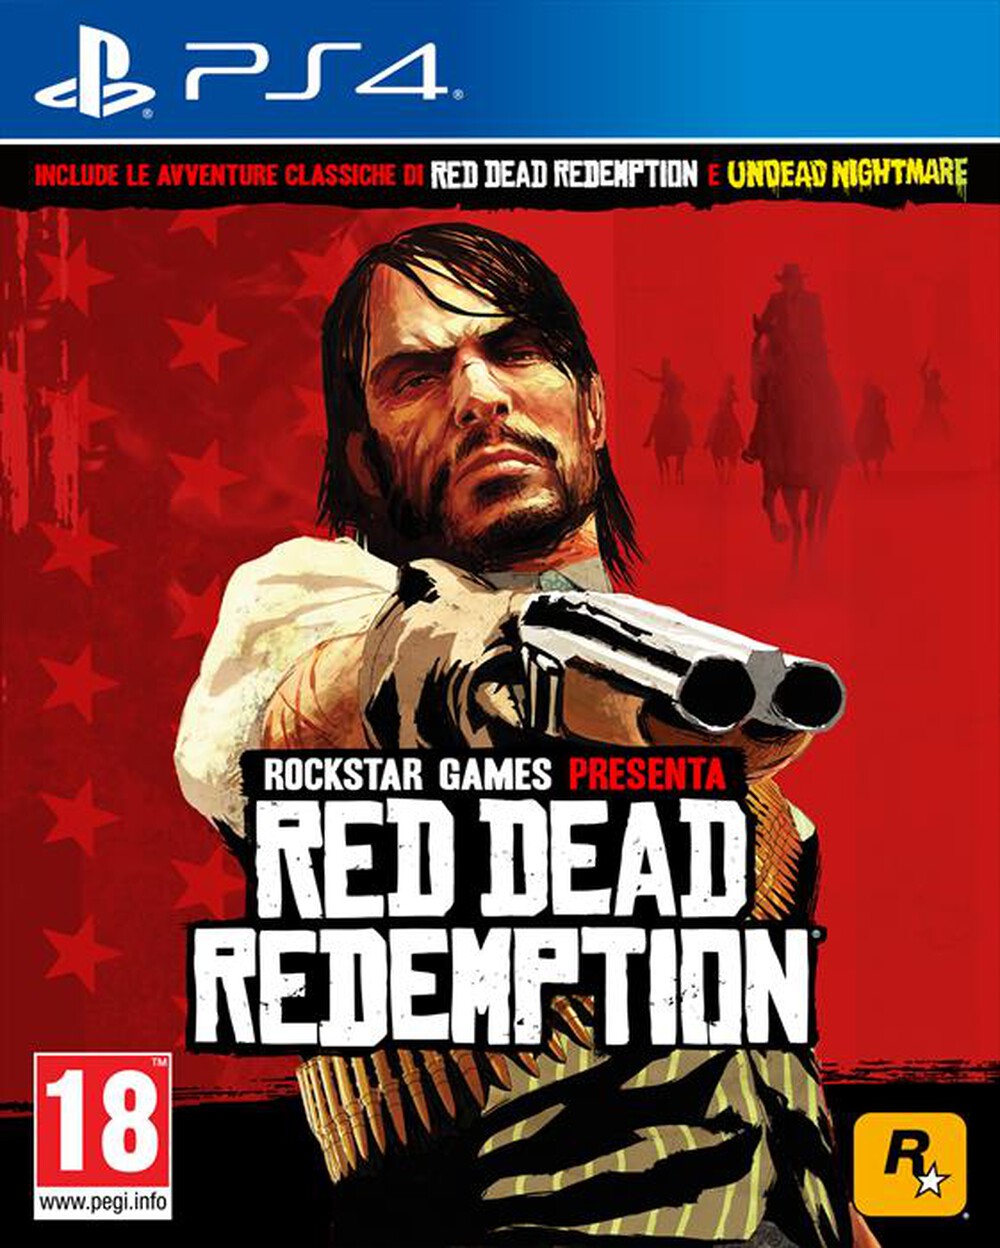 "ROCKSTAR GAMES - RED DEAD REDEMPTION PS4"